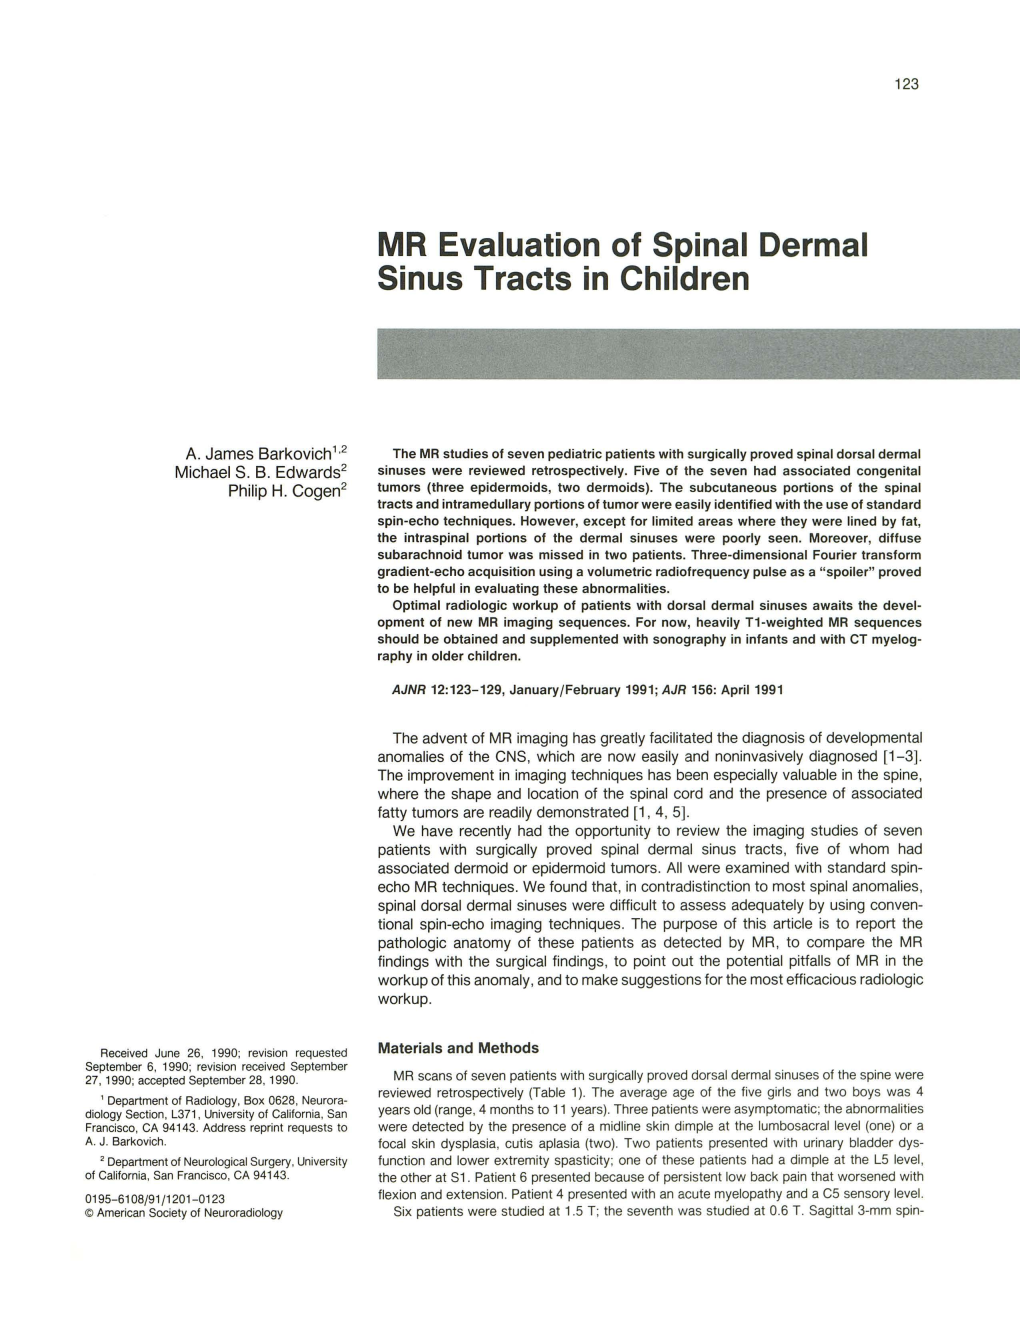 MR Evaluation of Spinal Dermal Sinus Tracts in Children